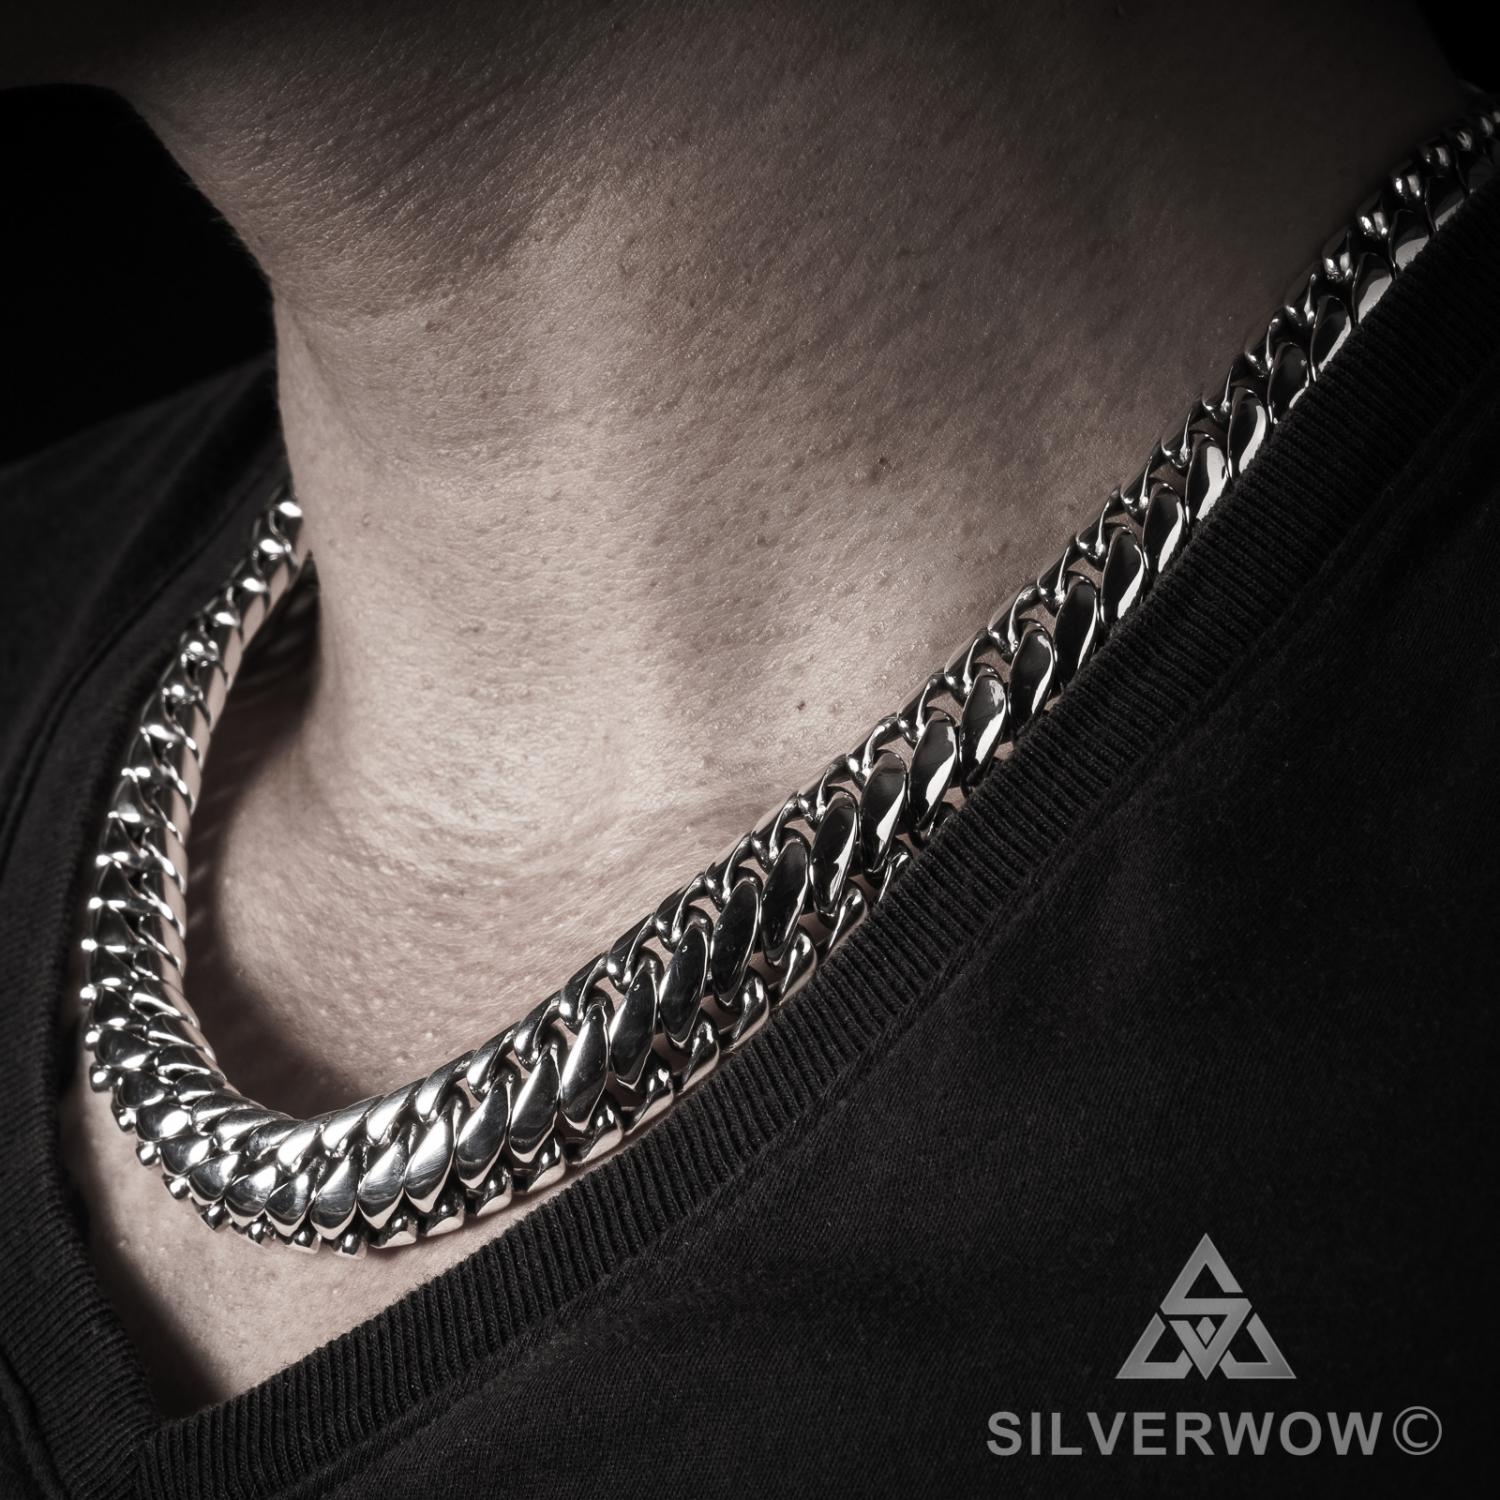 Silver Metal Snake Chain Snake chain, Silver snake chain, Necklace, Silver  Snake Chain - valleyresorts.co.uk